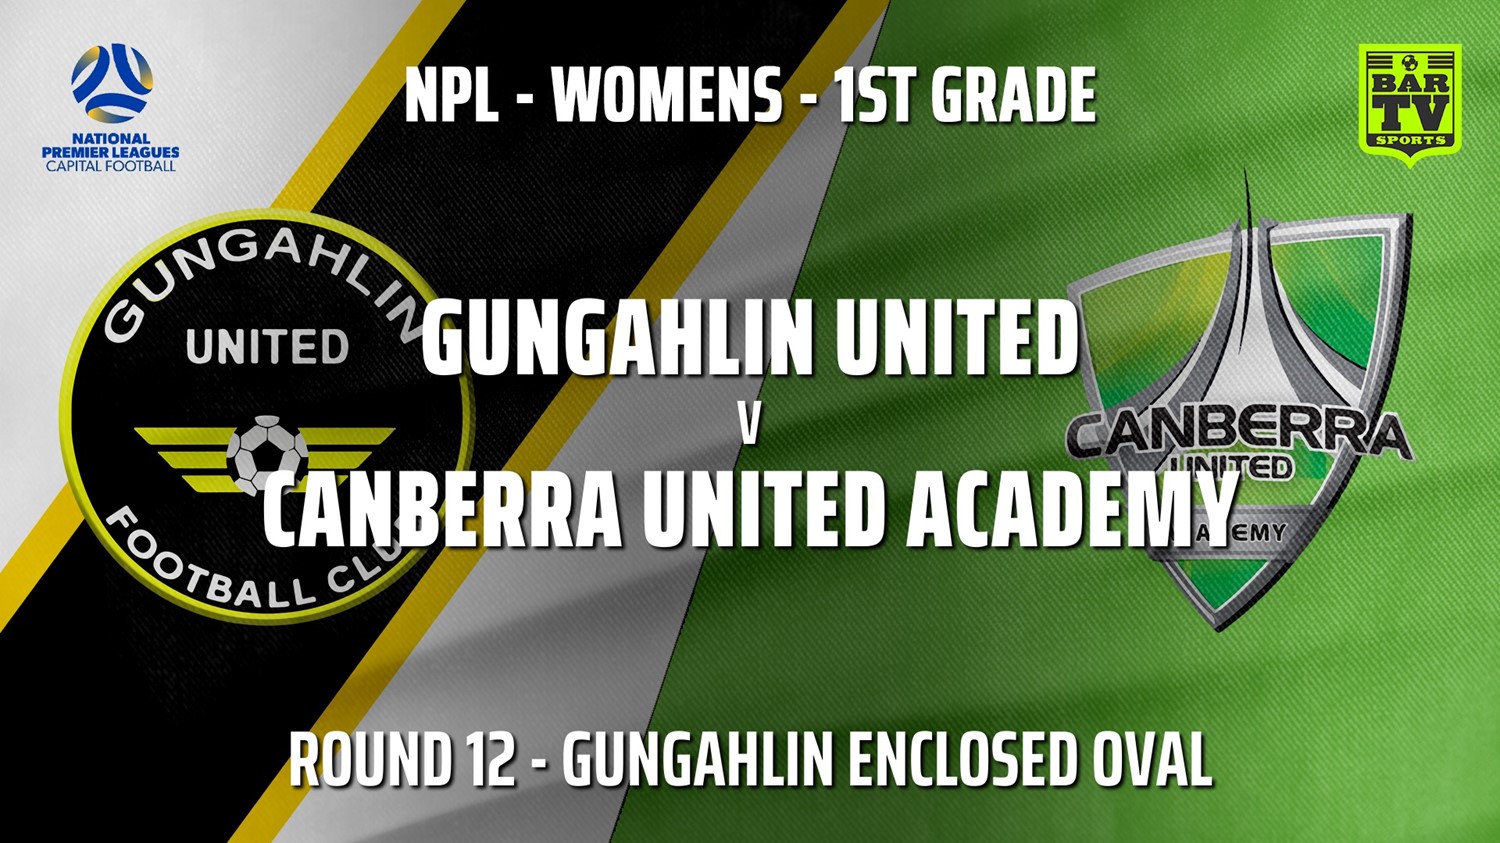 210704-Capital Womens Round 12 - Gungahlin United FC (women) v Canberra United Academy Slate Image